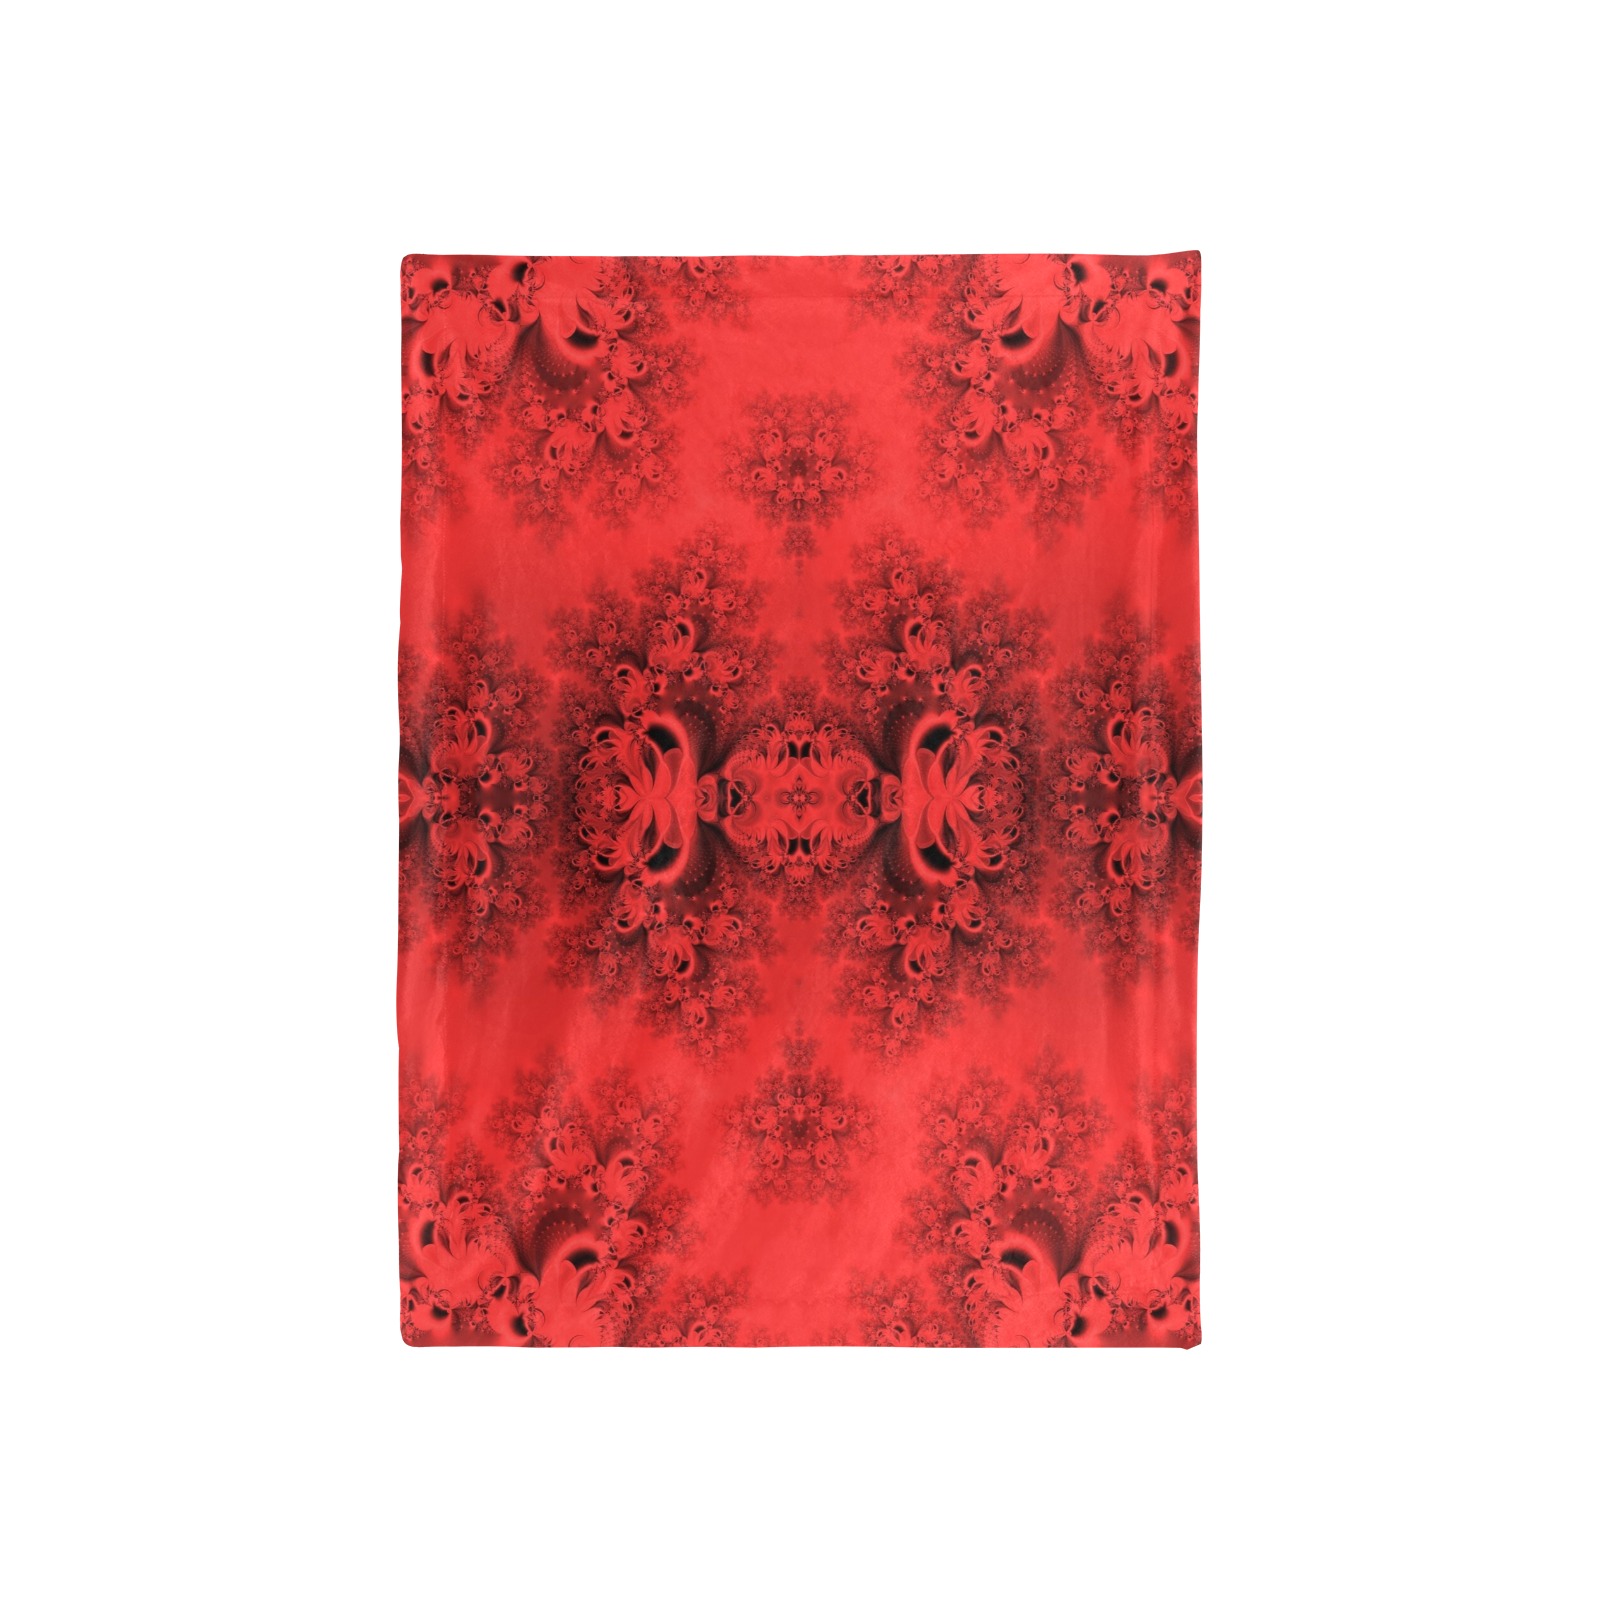 Autumn Reds in the Garden Frost Fractal Baby Blanket 40"x50"